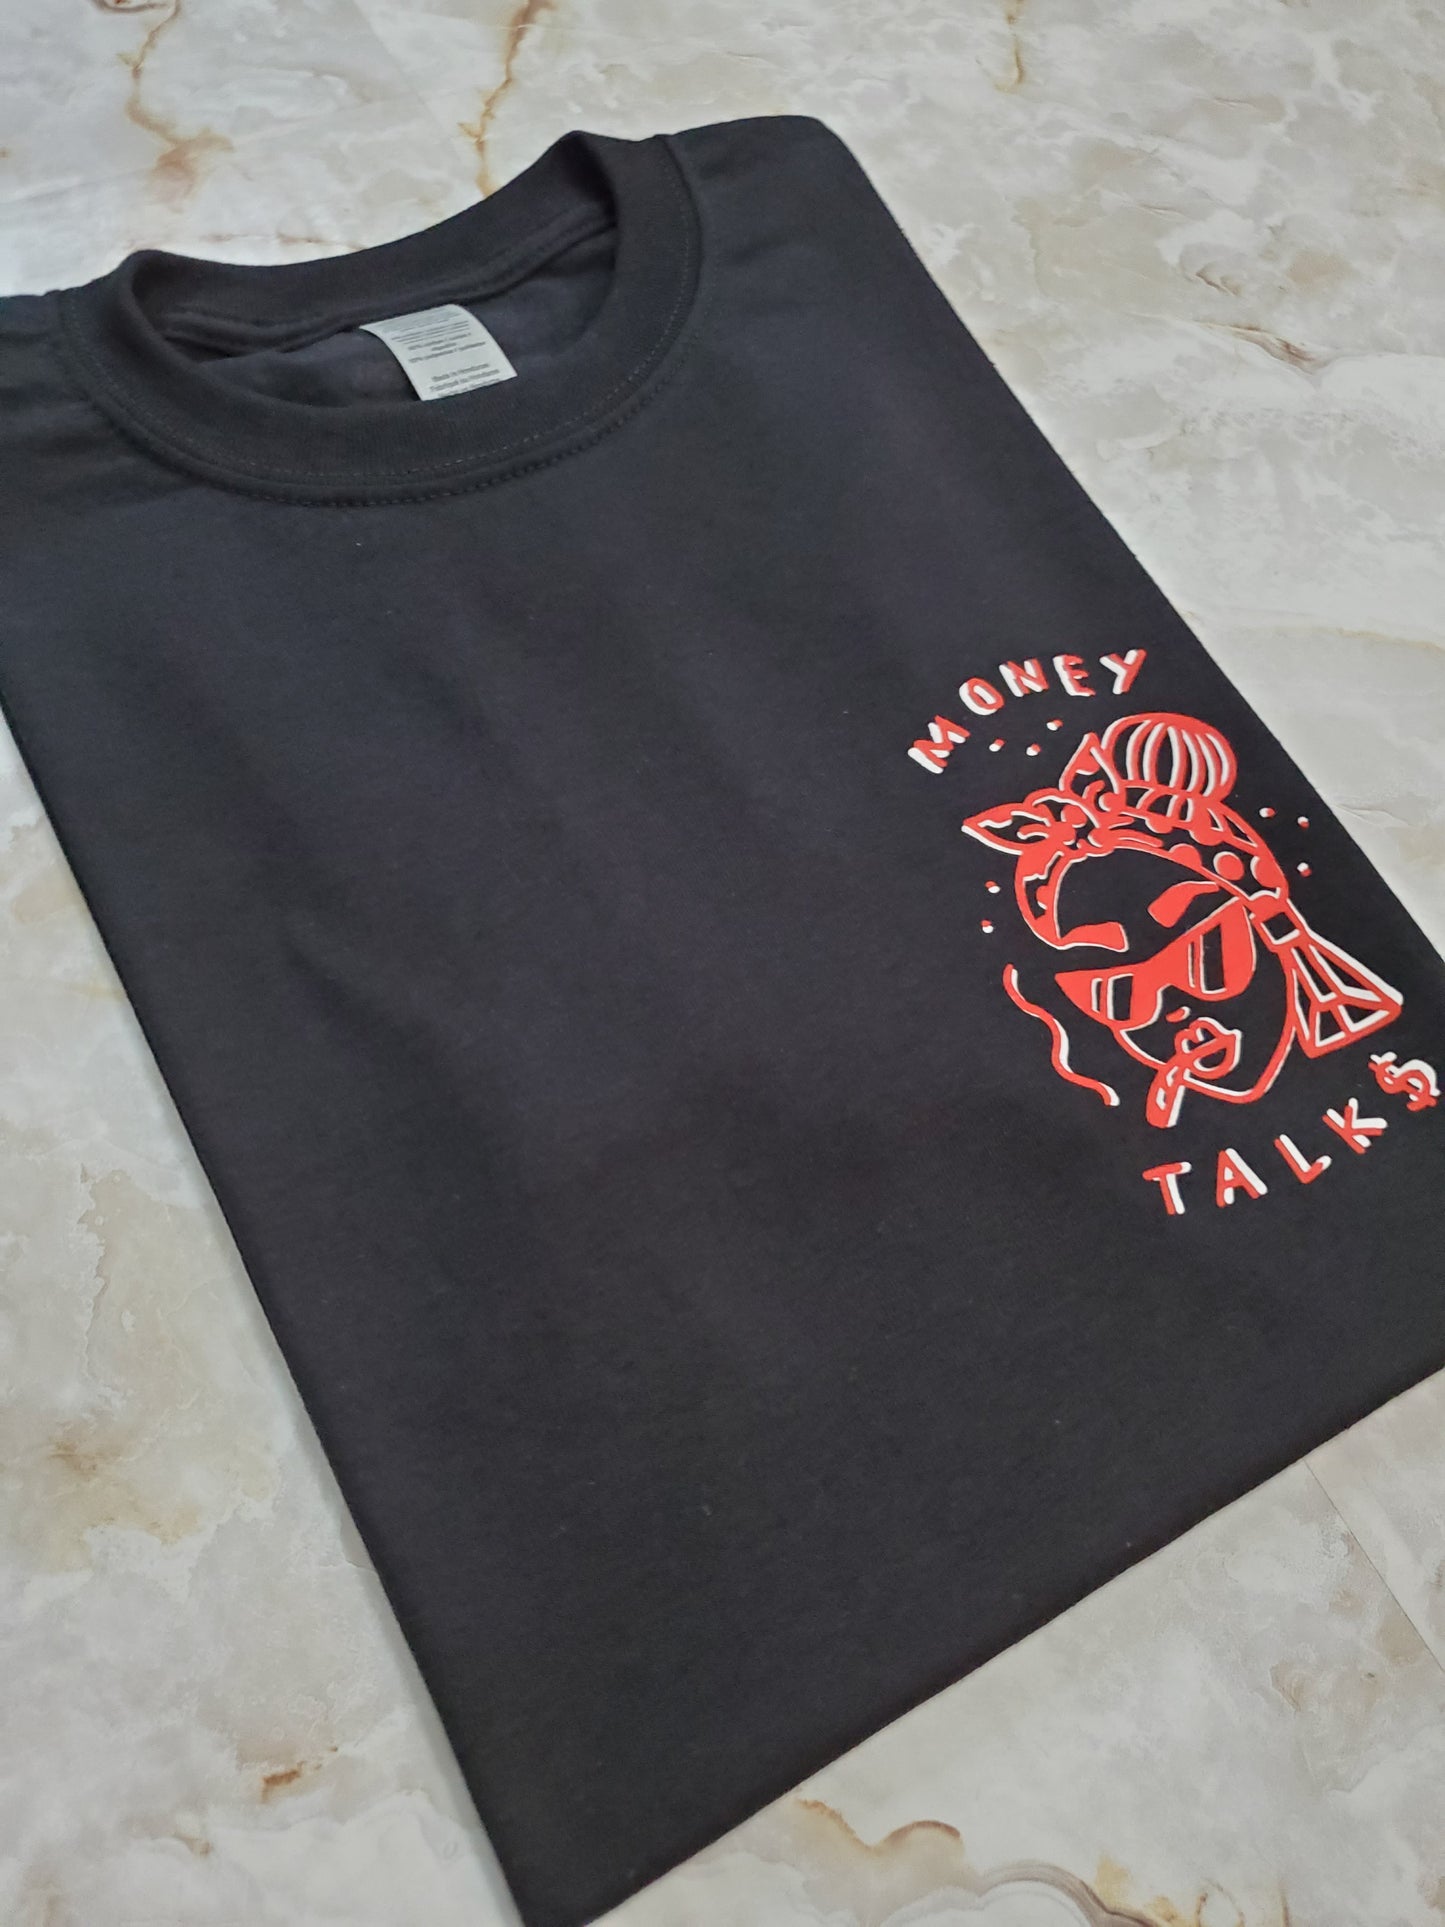 Money Talk$ T-Shirt - Centre Ave Clothing Co.